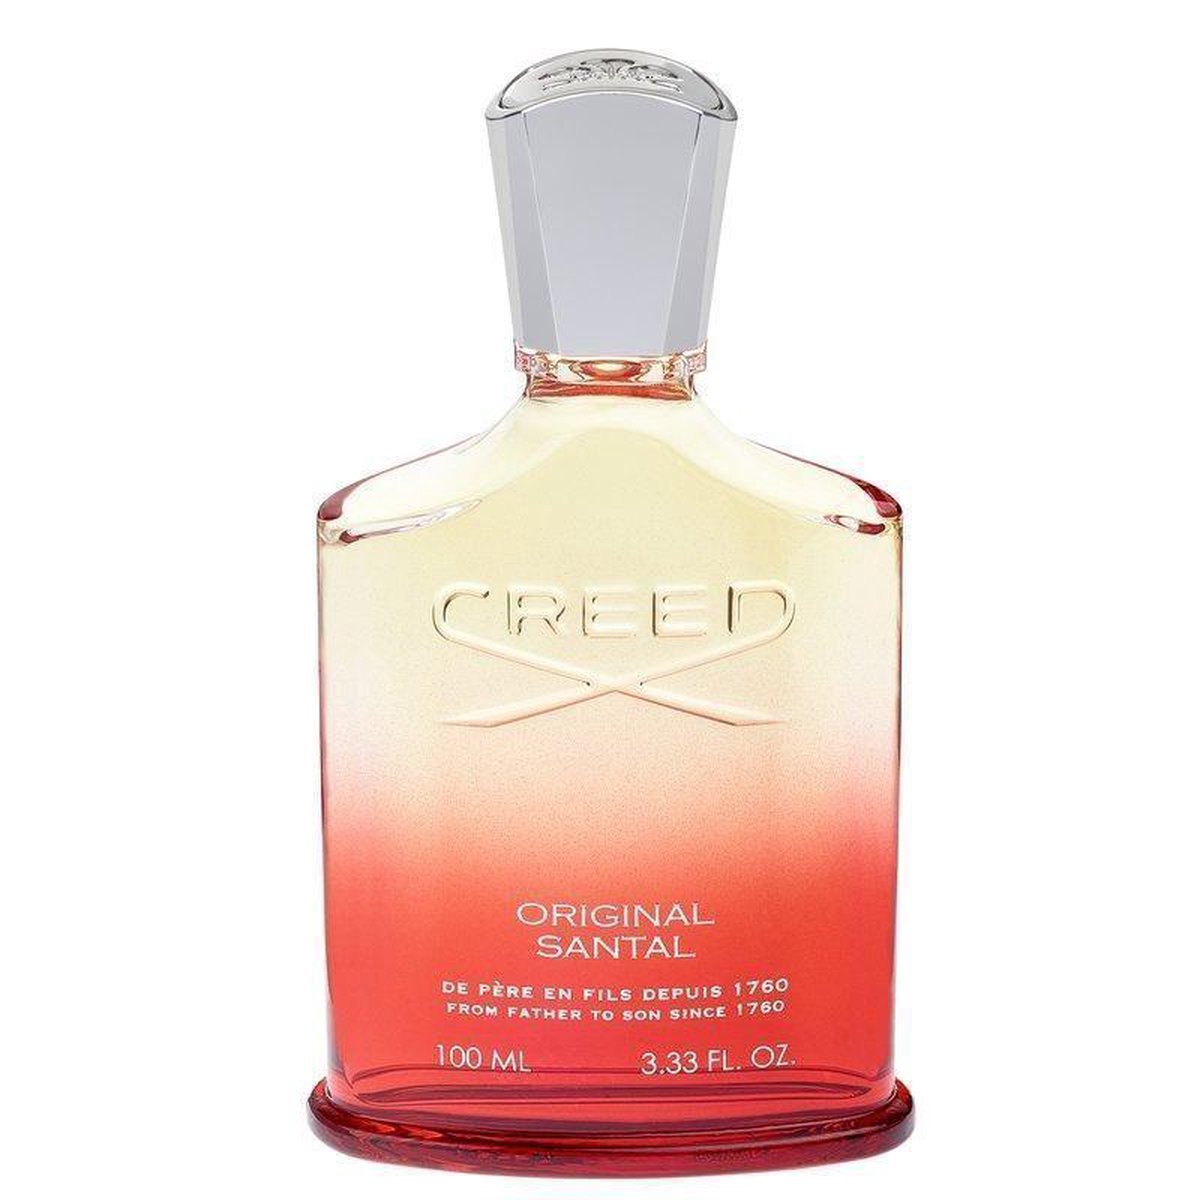 Creed - Eau de parfum - Original Santal - 100 ml